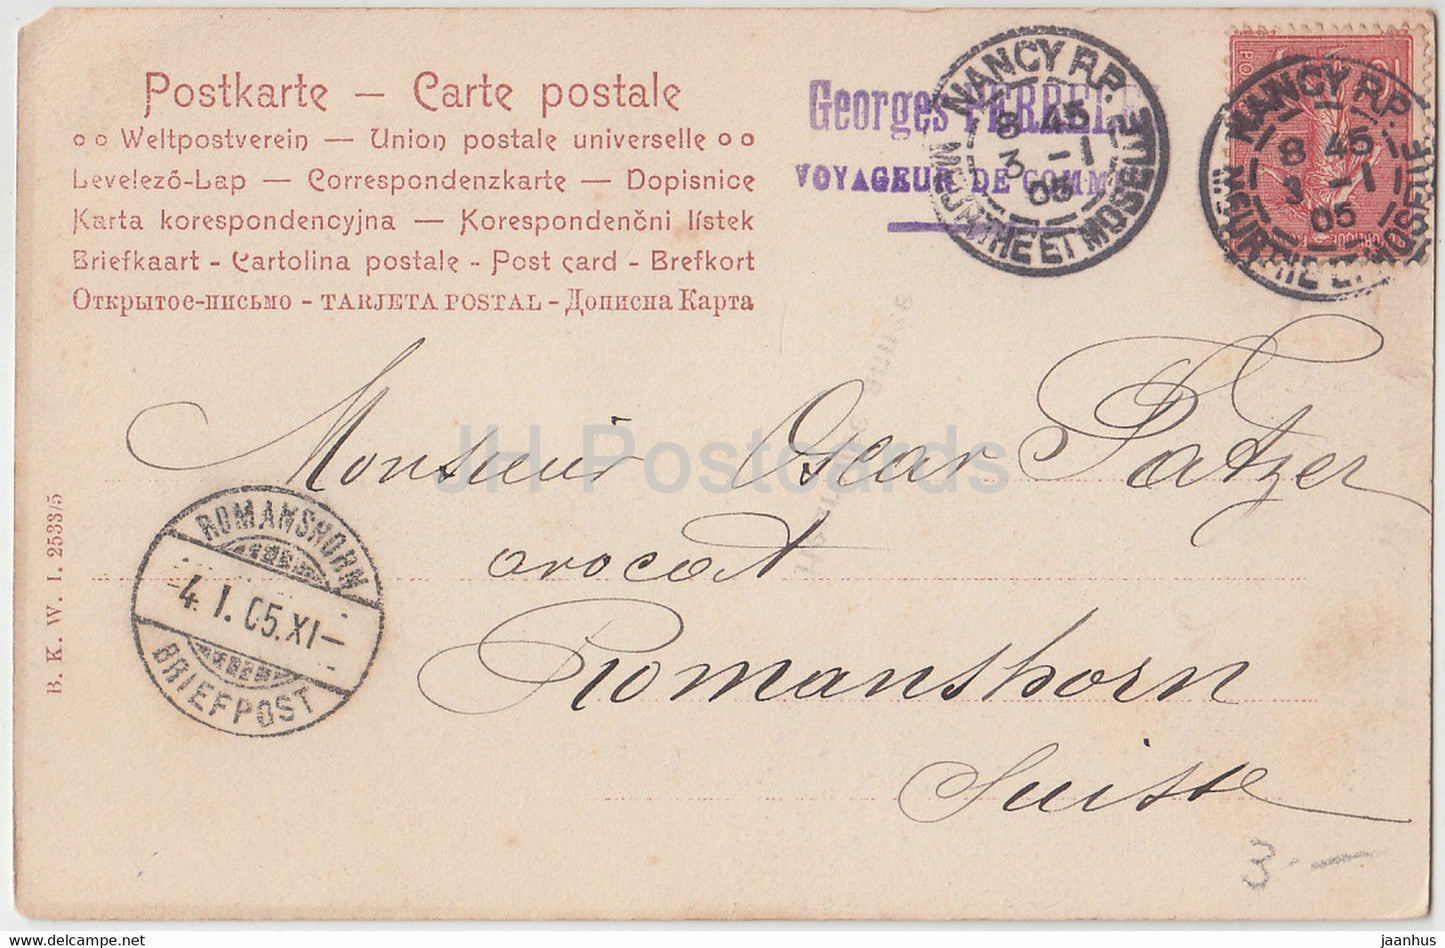 New Year Greeting Card - Heureuse Annee - women - B K W  2533/5 - old postcard - 1905 - France - used